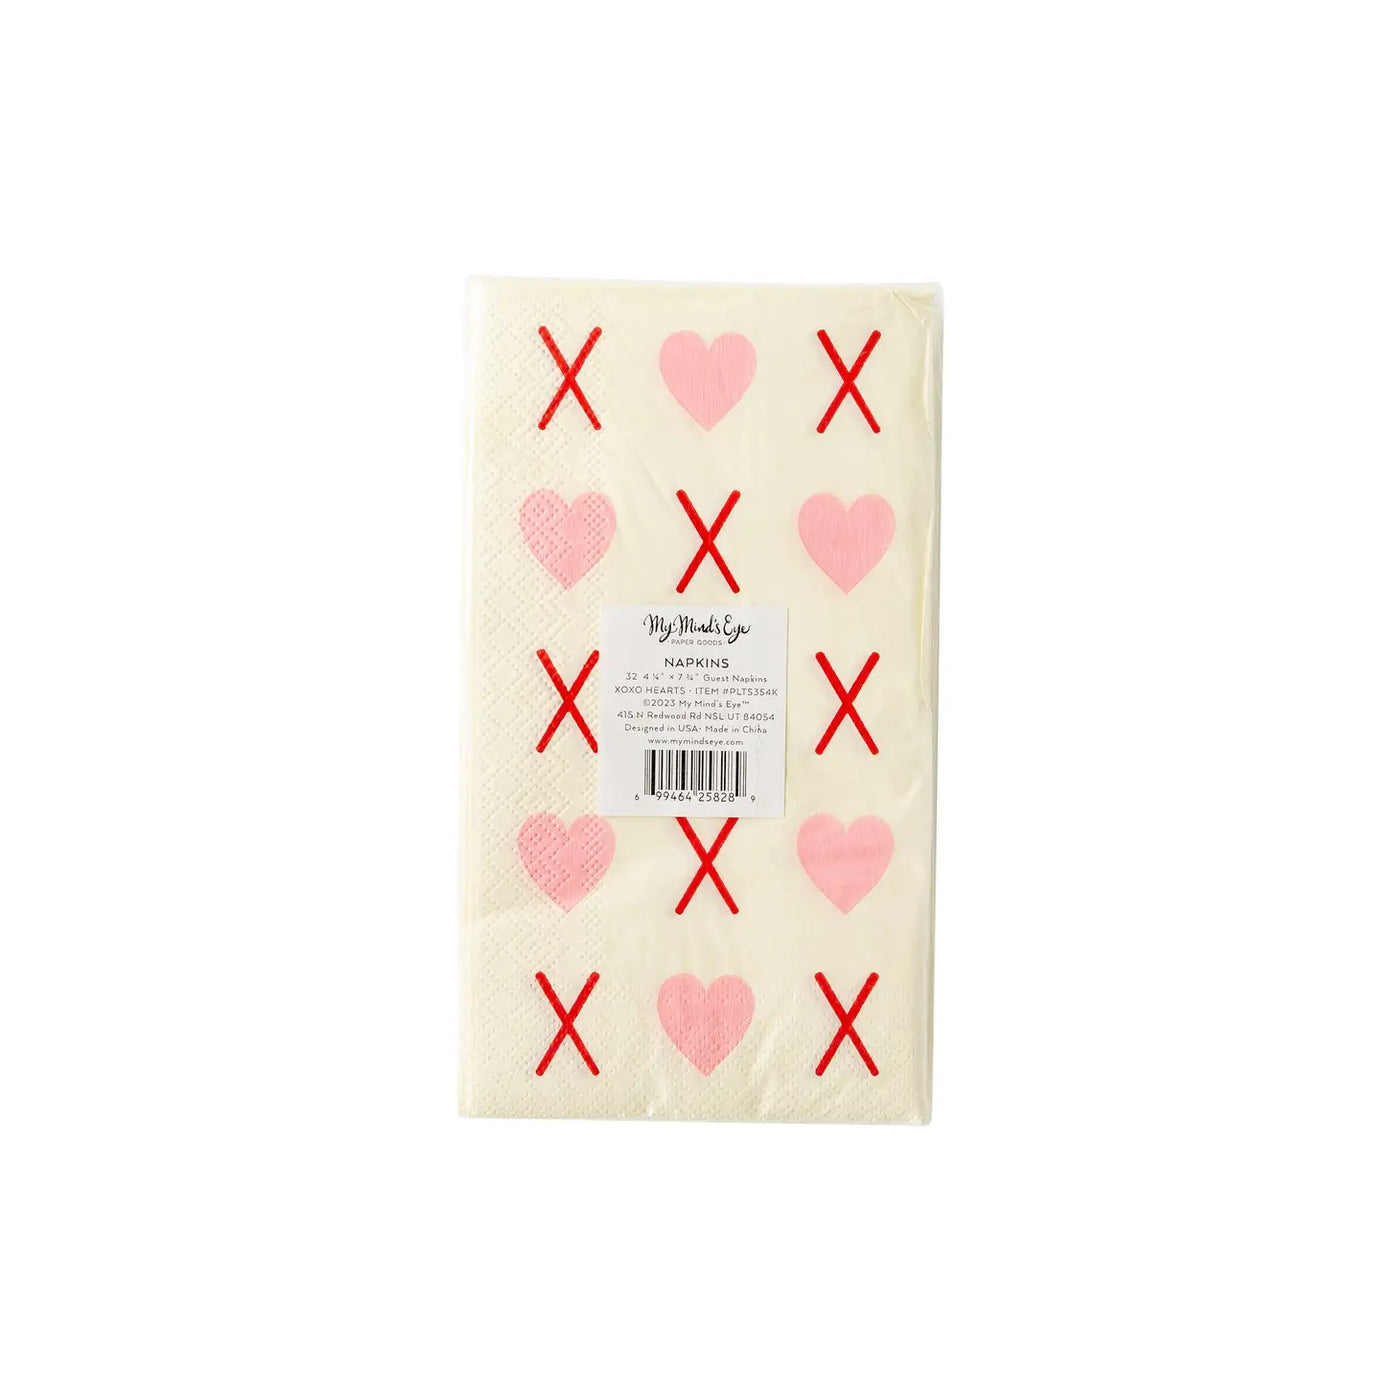 XOXO HEART GUEST TOWEL